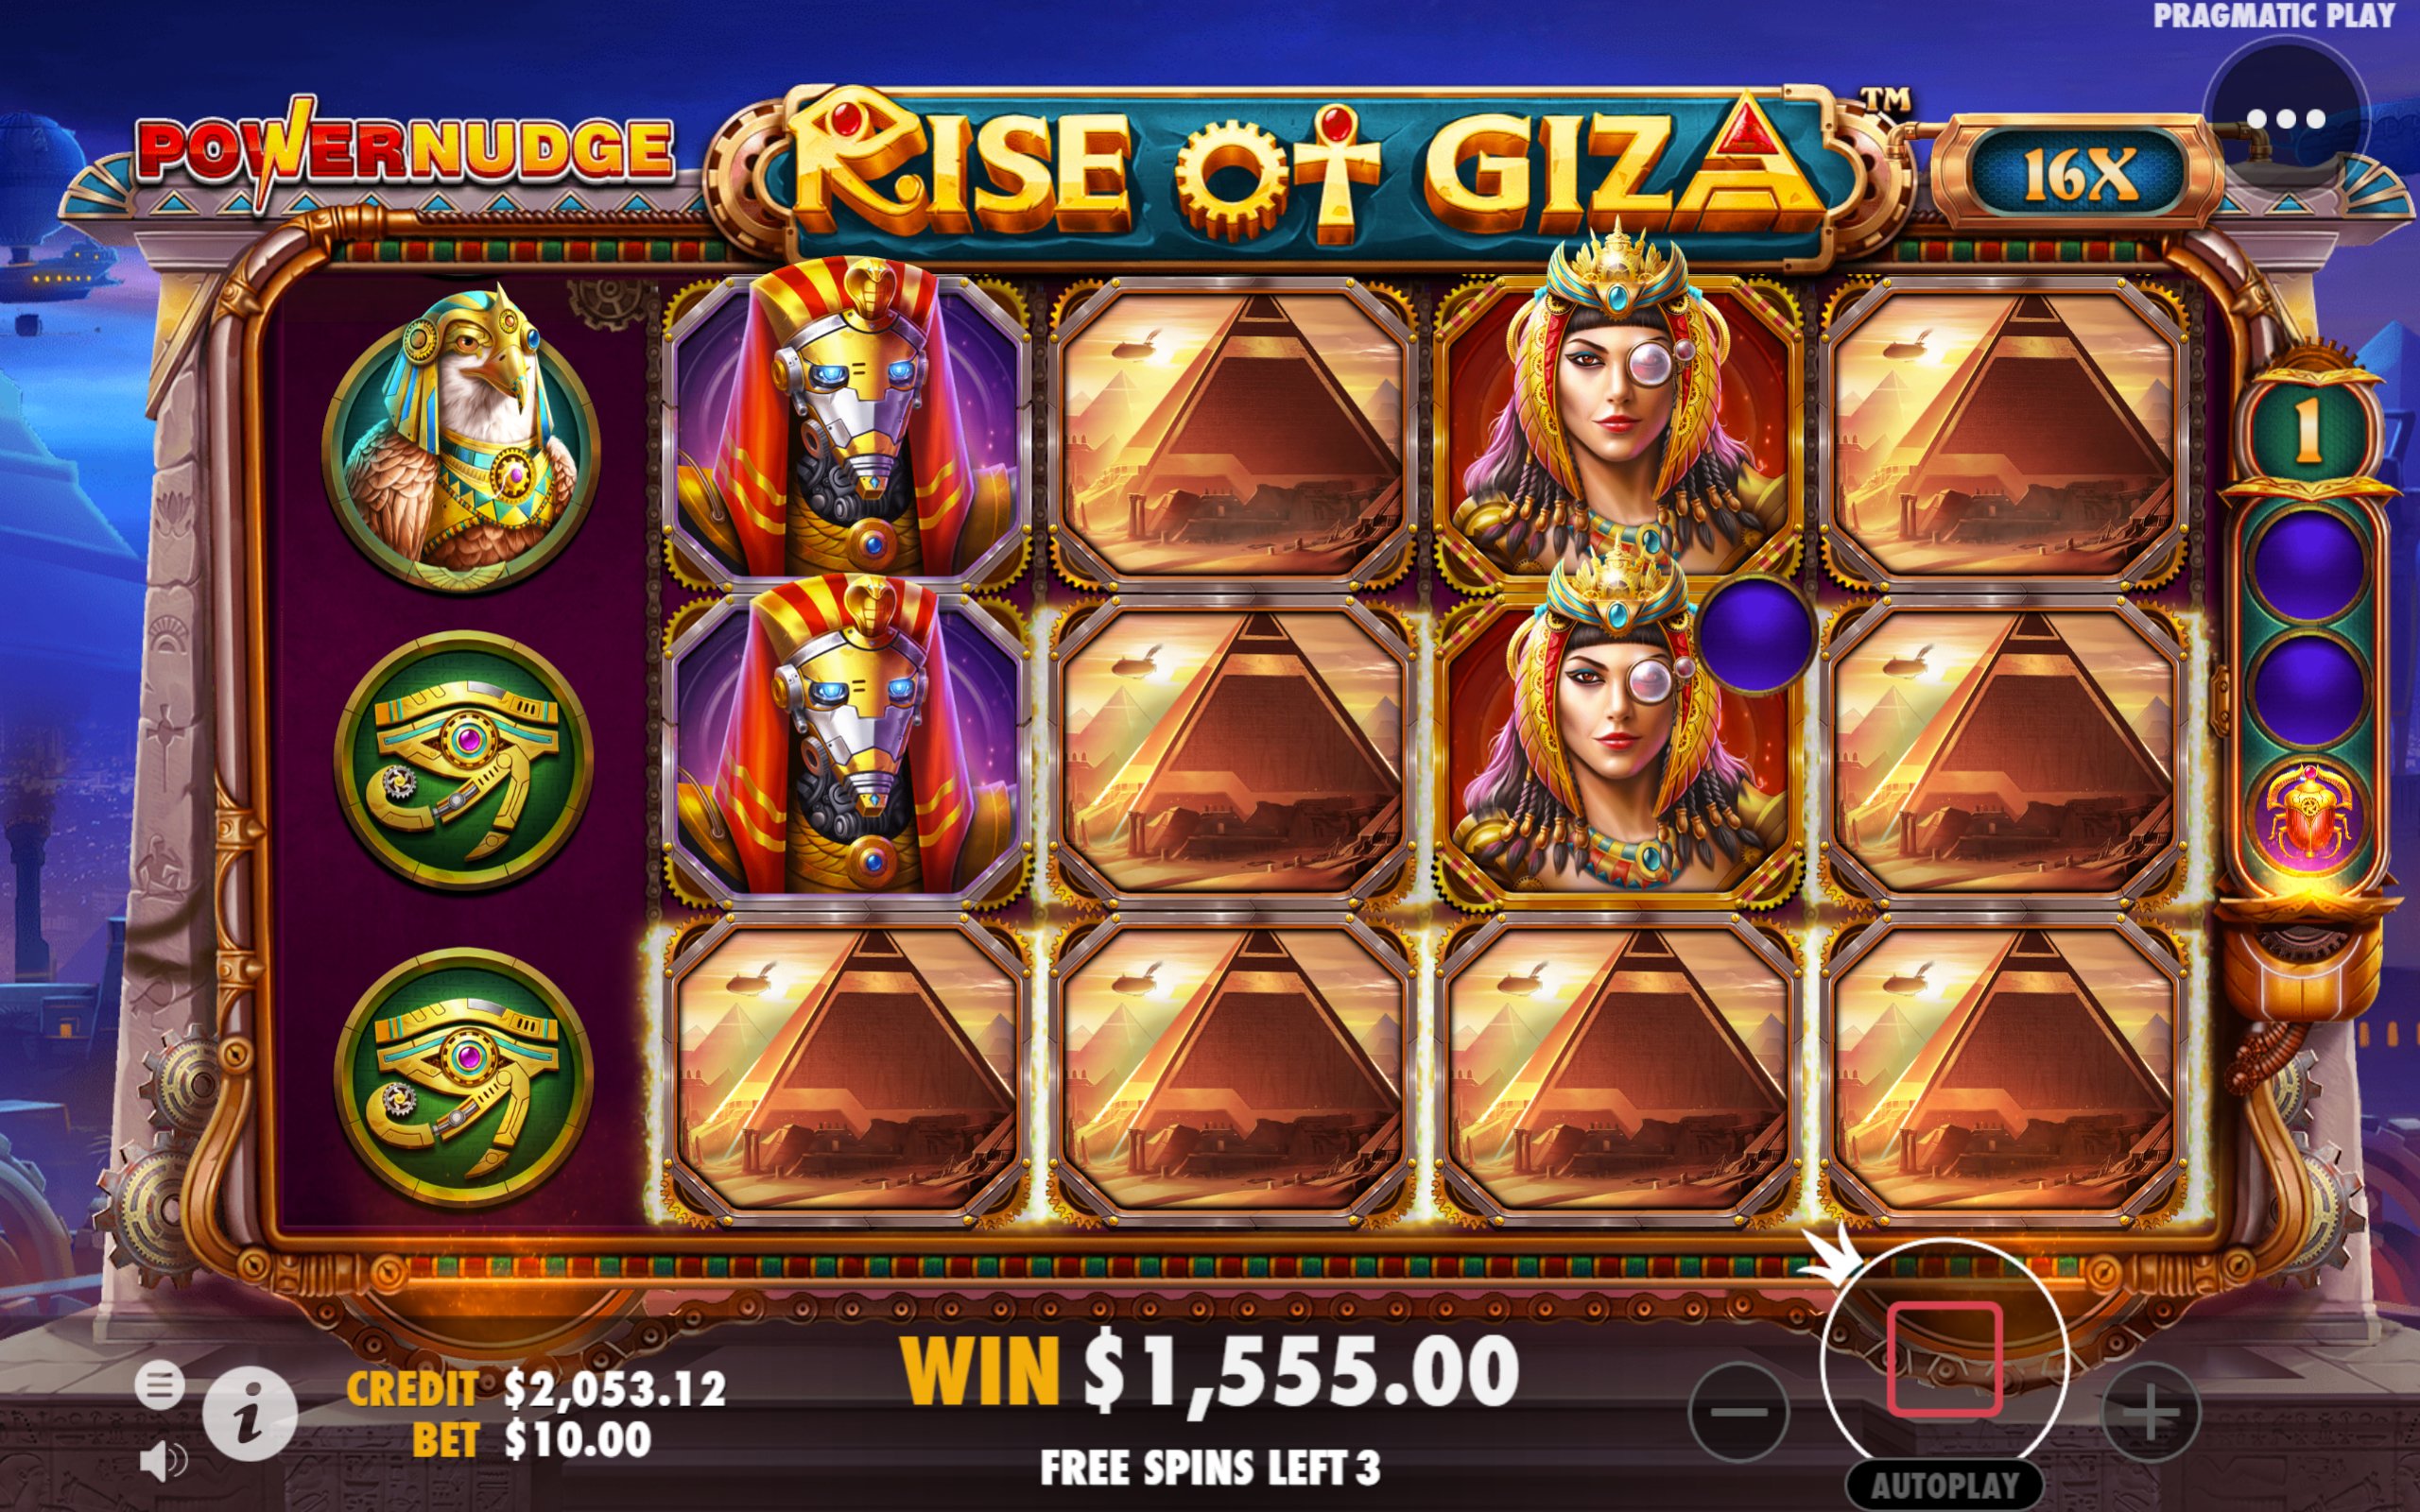 Rise of Giza Powernudge Slot Gameplay